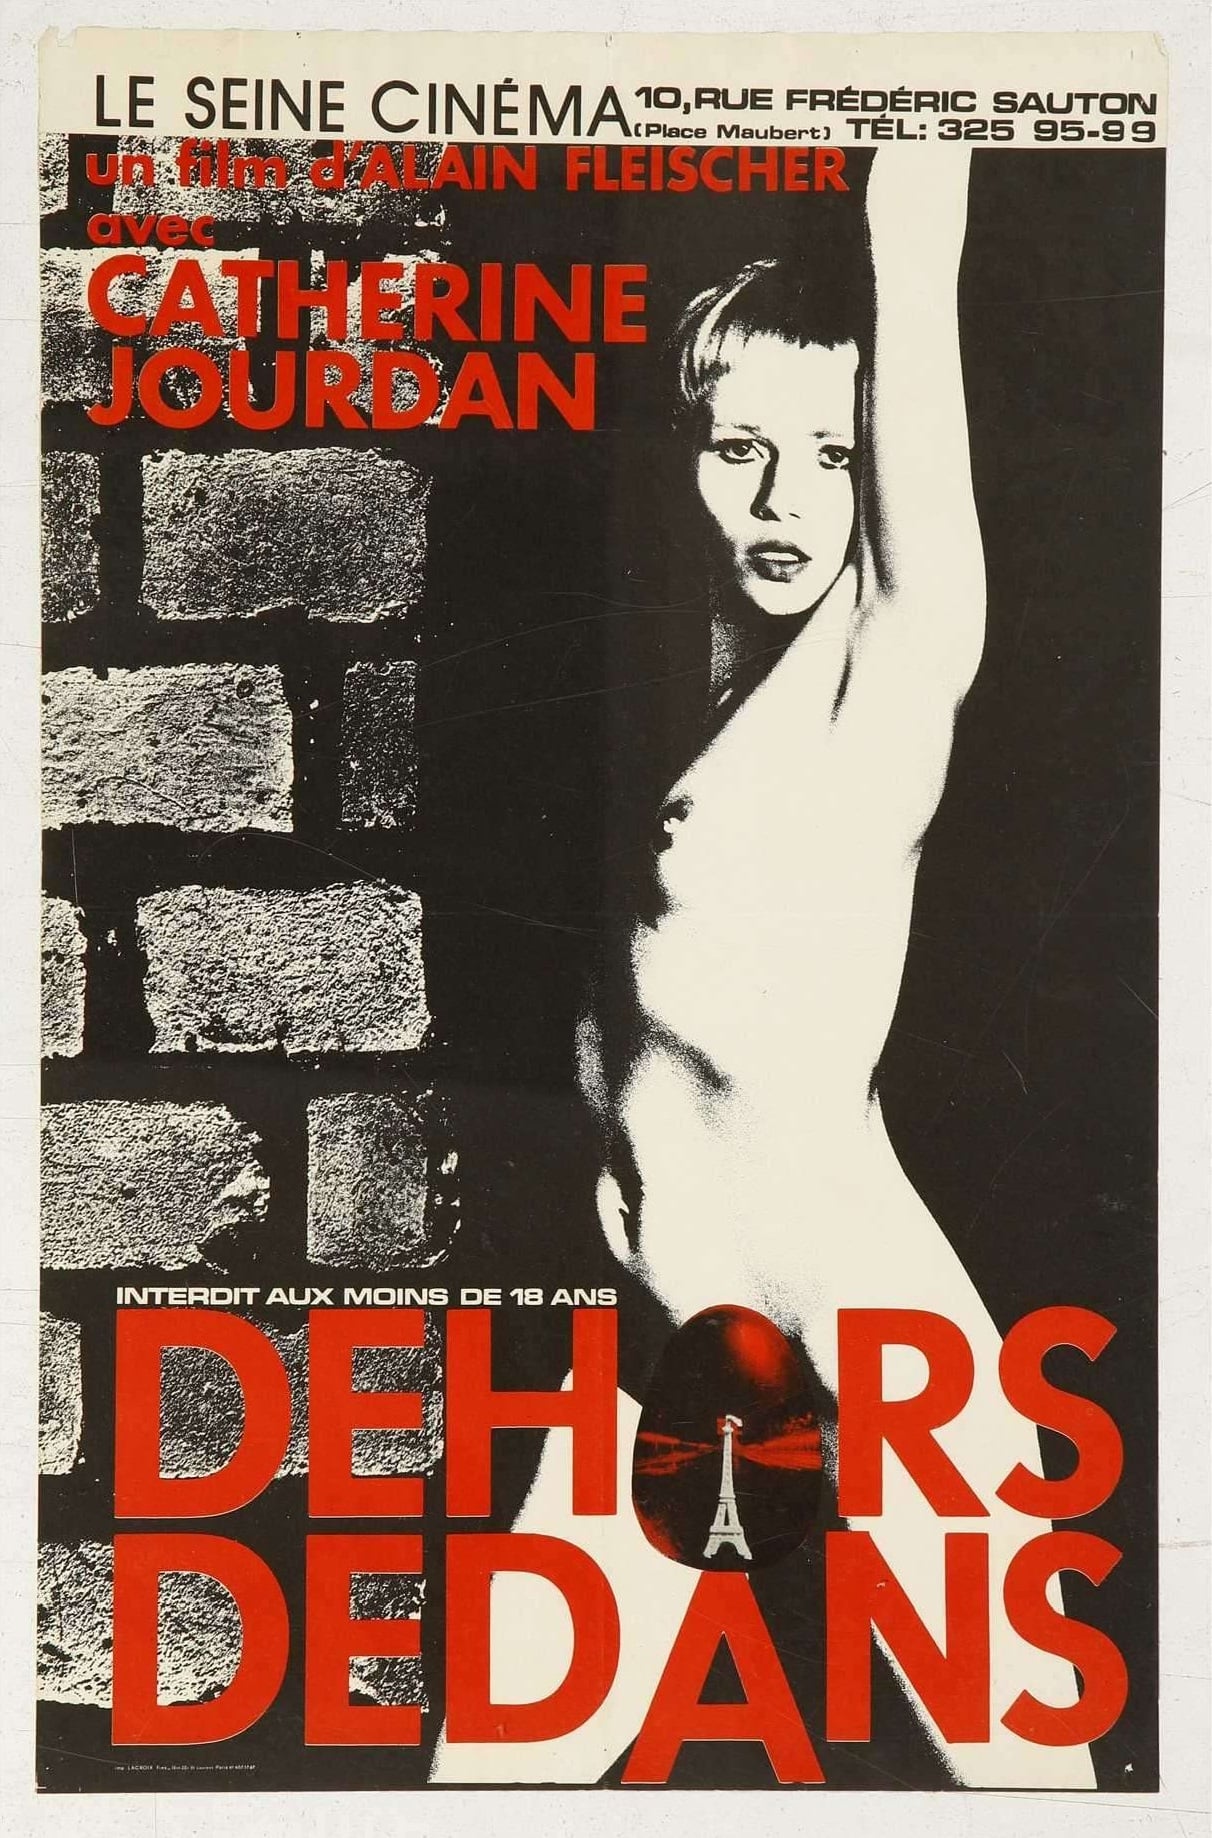 Dehors-dedans (1975)